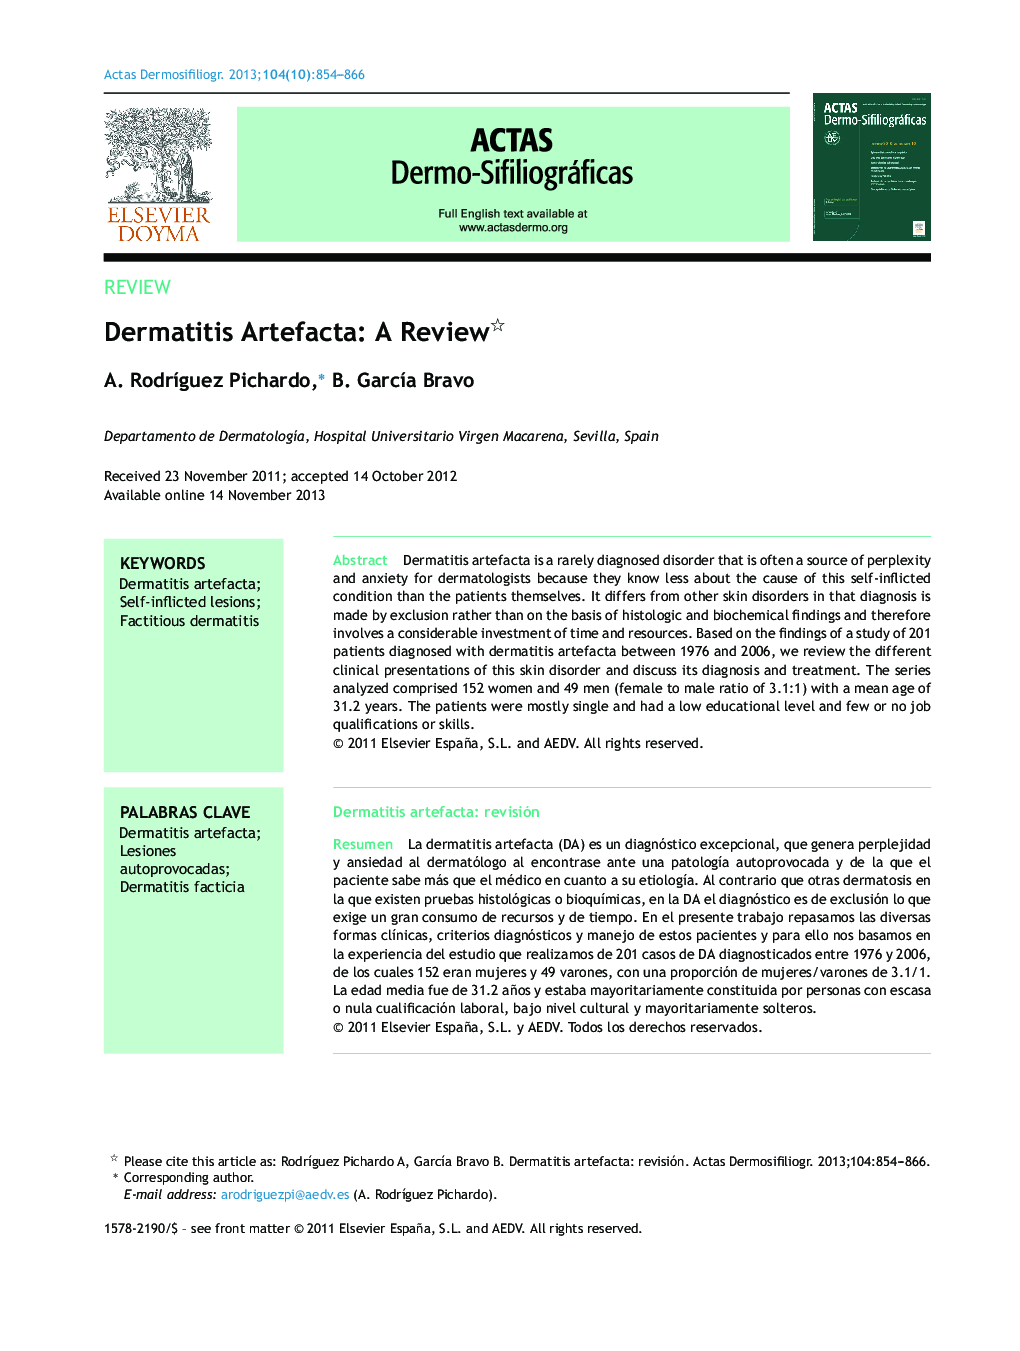 Dermatitis Artefacta: A Review 